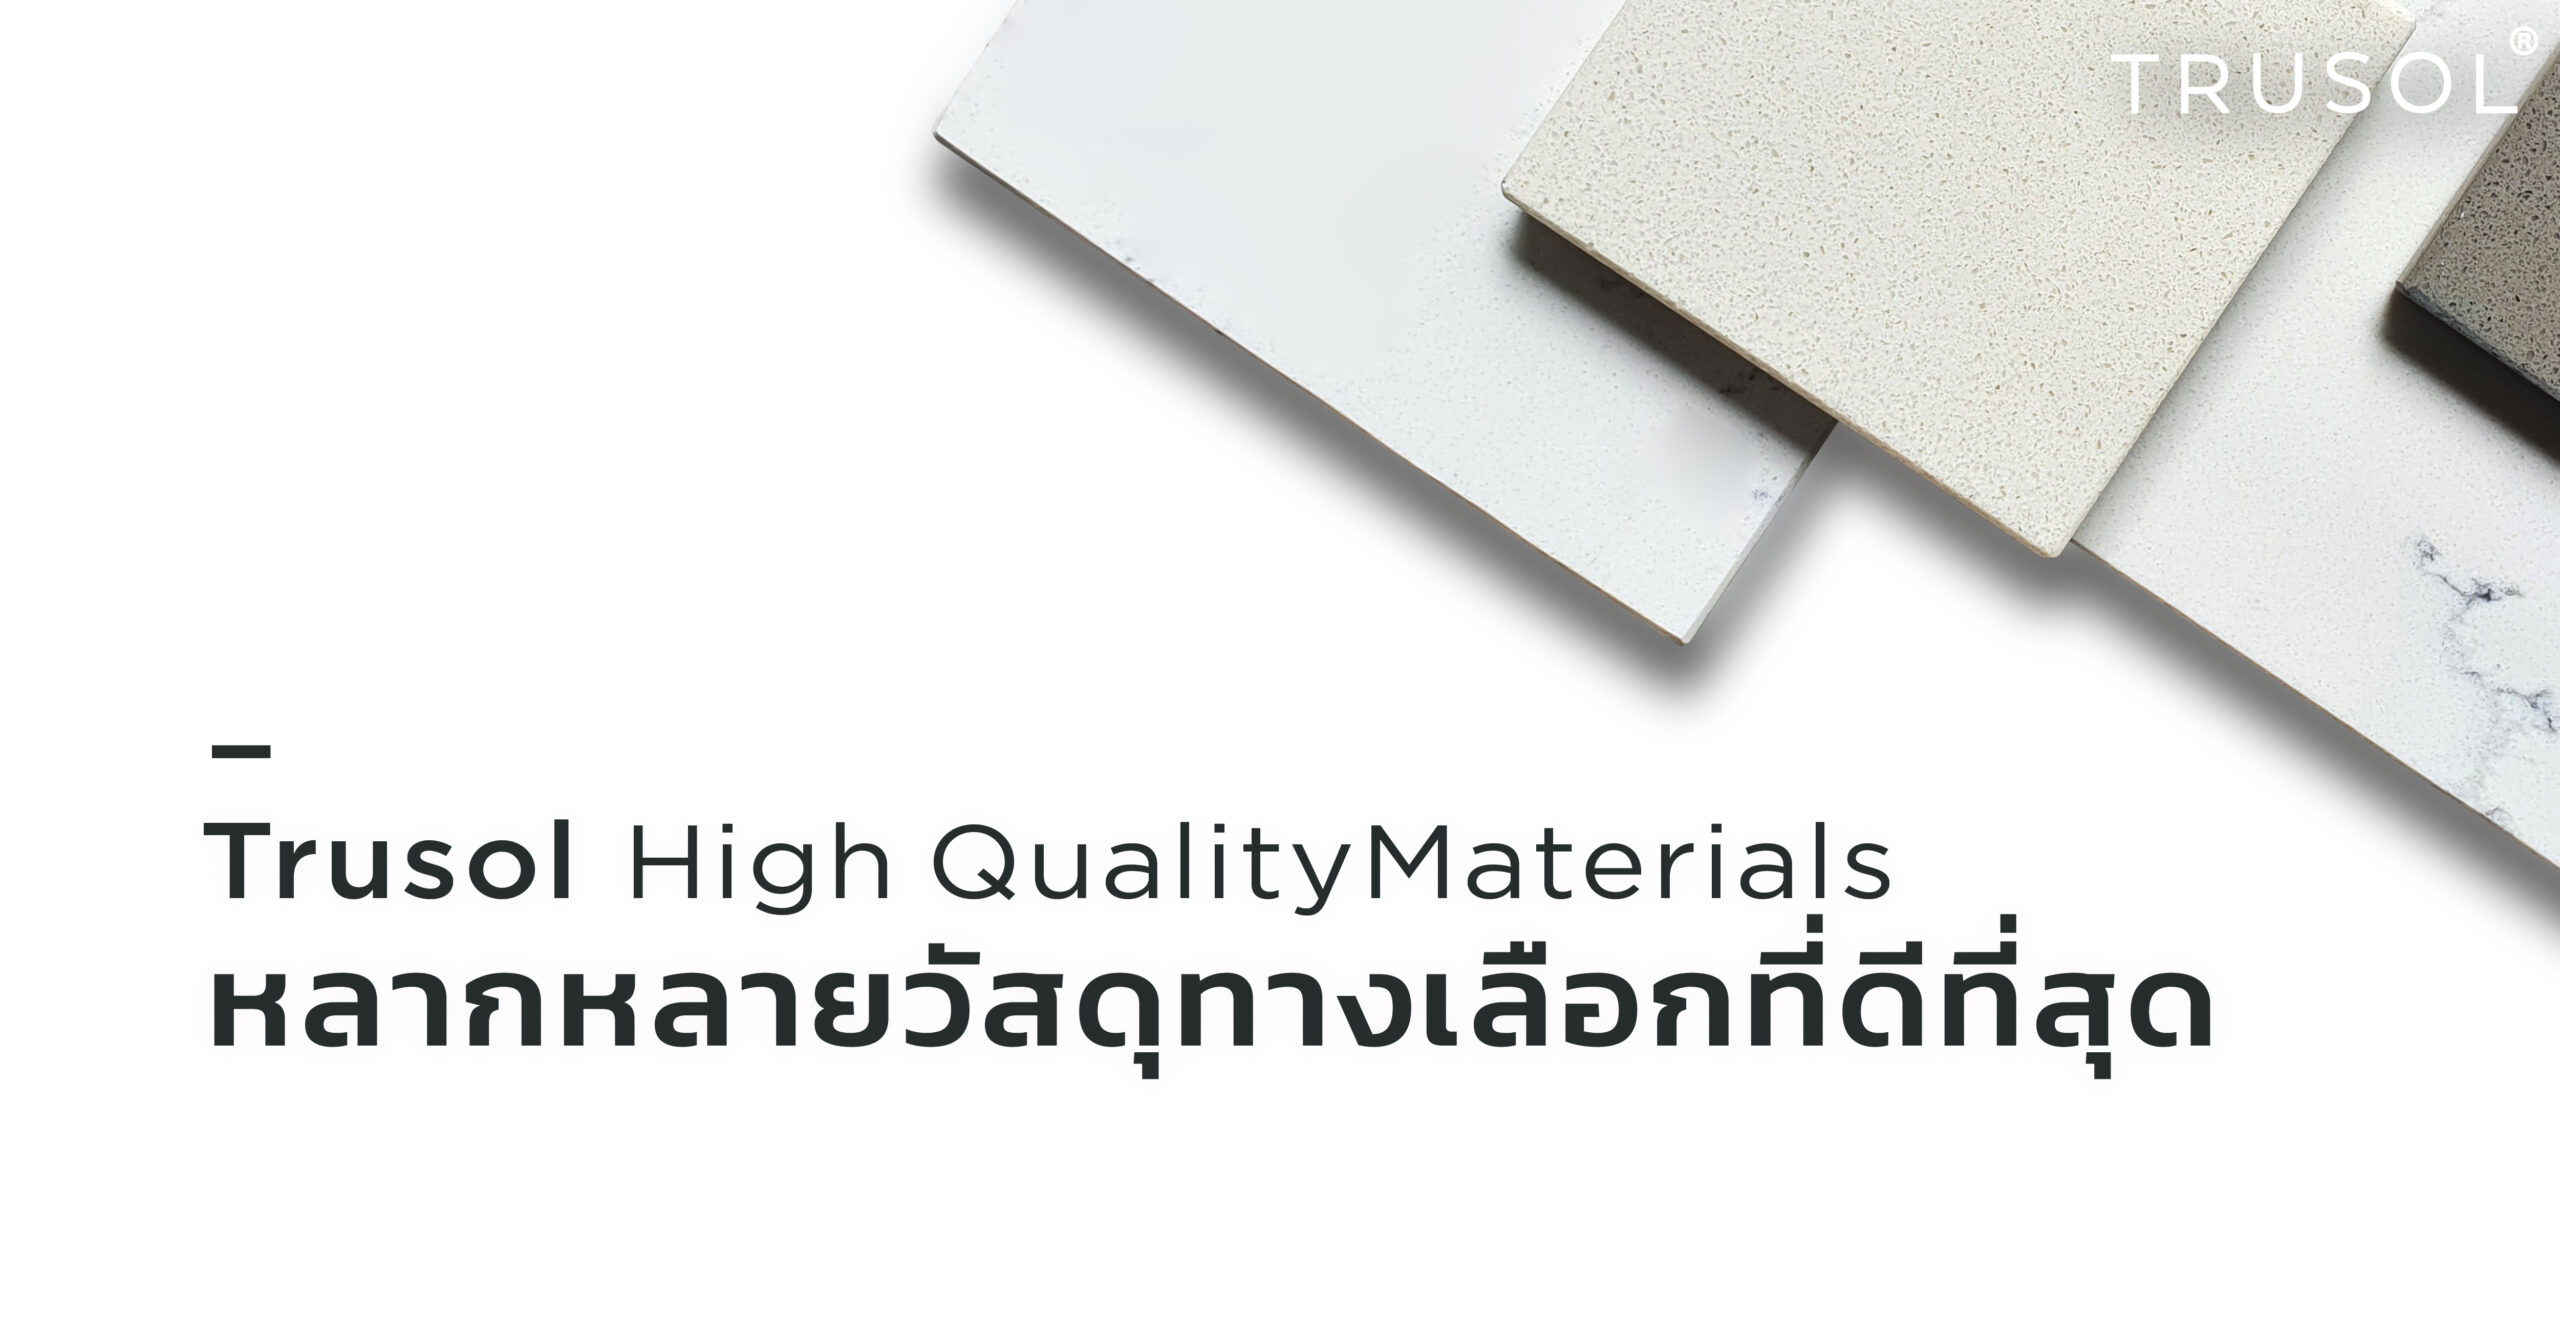 Trusol High Quality Materials หลากหลายวัสดุทางเลือกที่ดีที่สุด เพื่อให้เหมาะกับความต้องการ